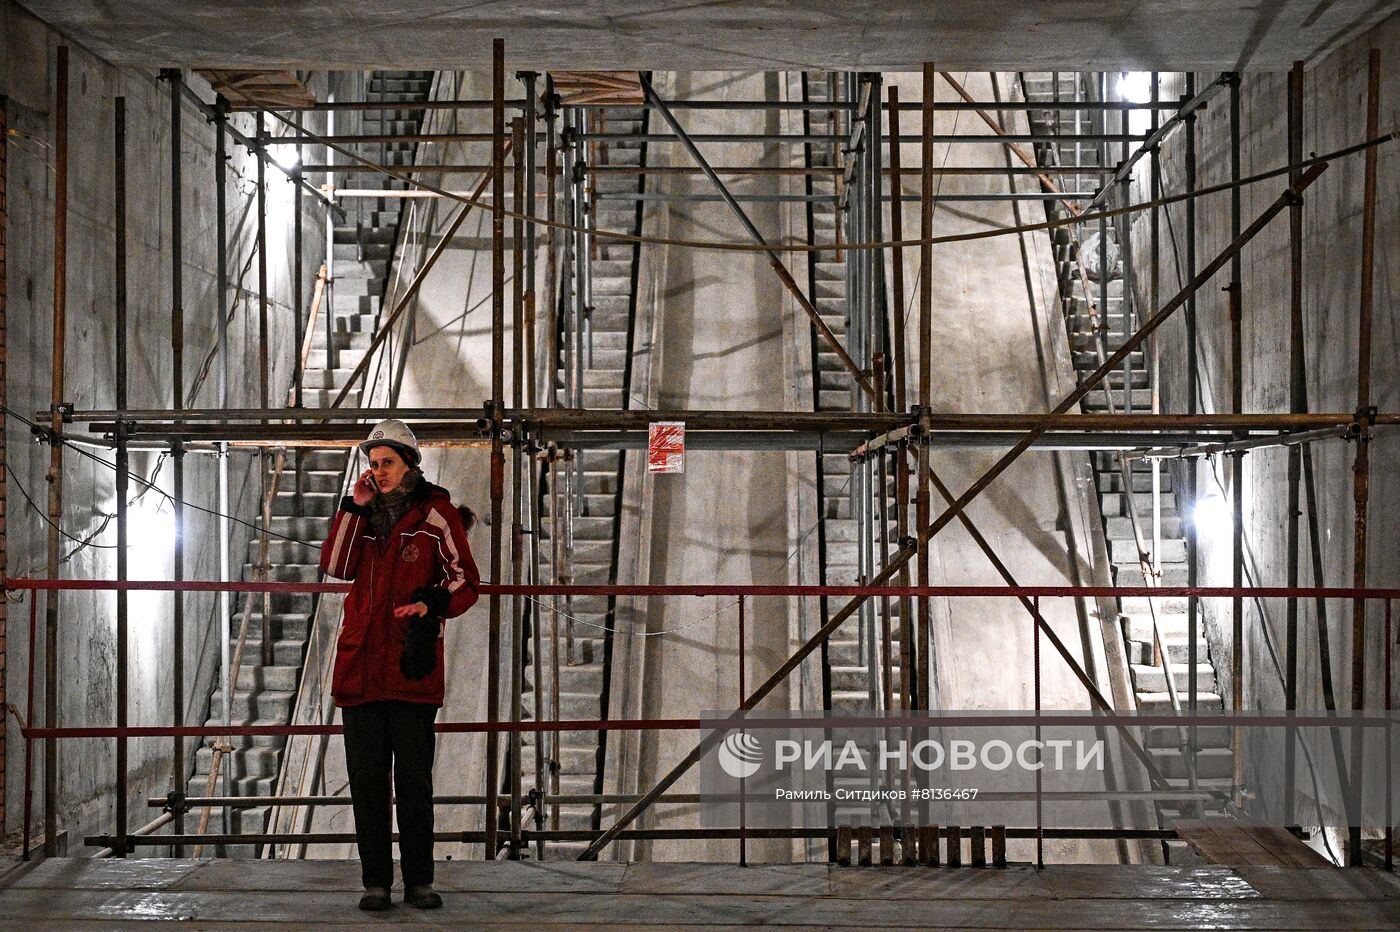 Строительство метро "Лианозово" 